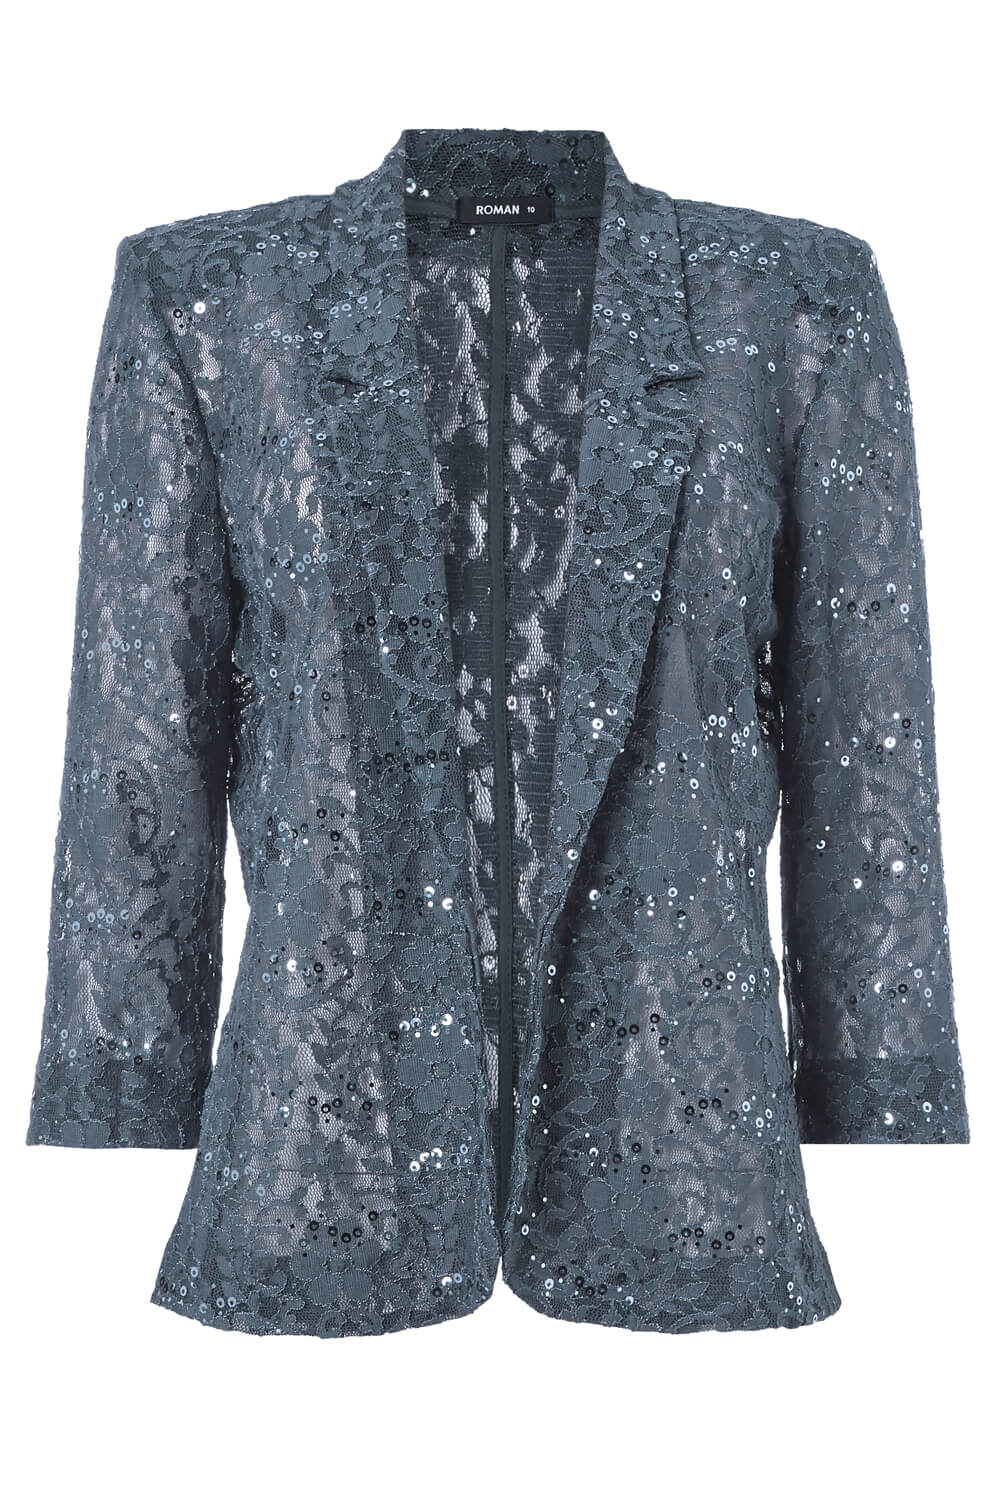 PEWTER Lace Sequin Embellished Blazer, Image 5 of 5